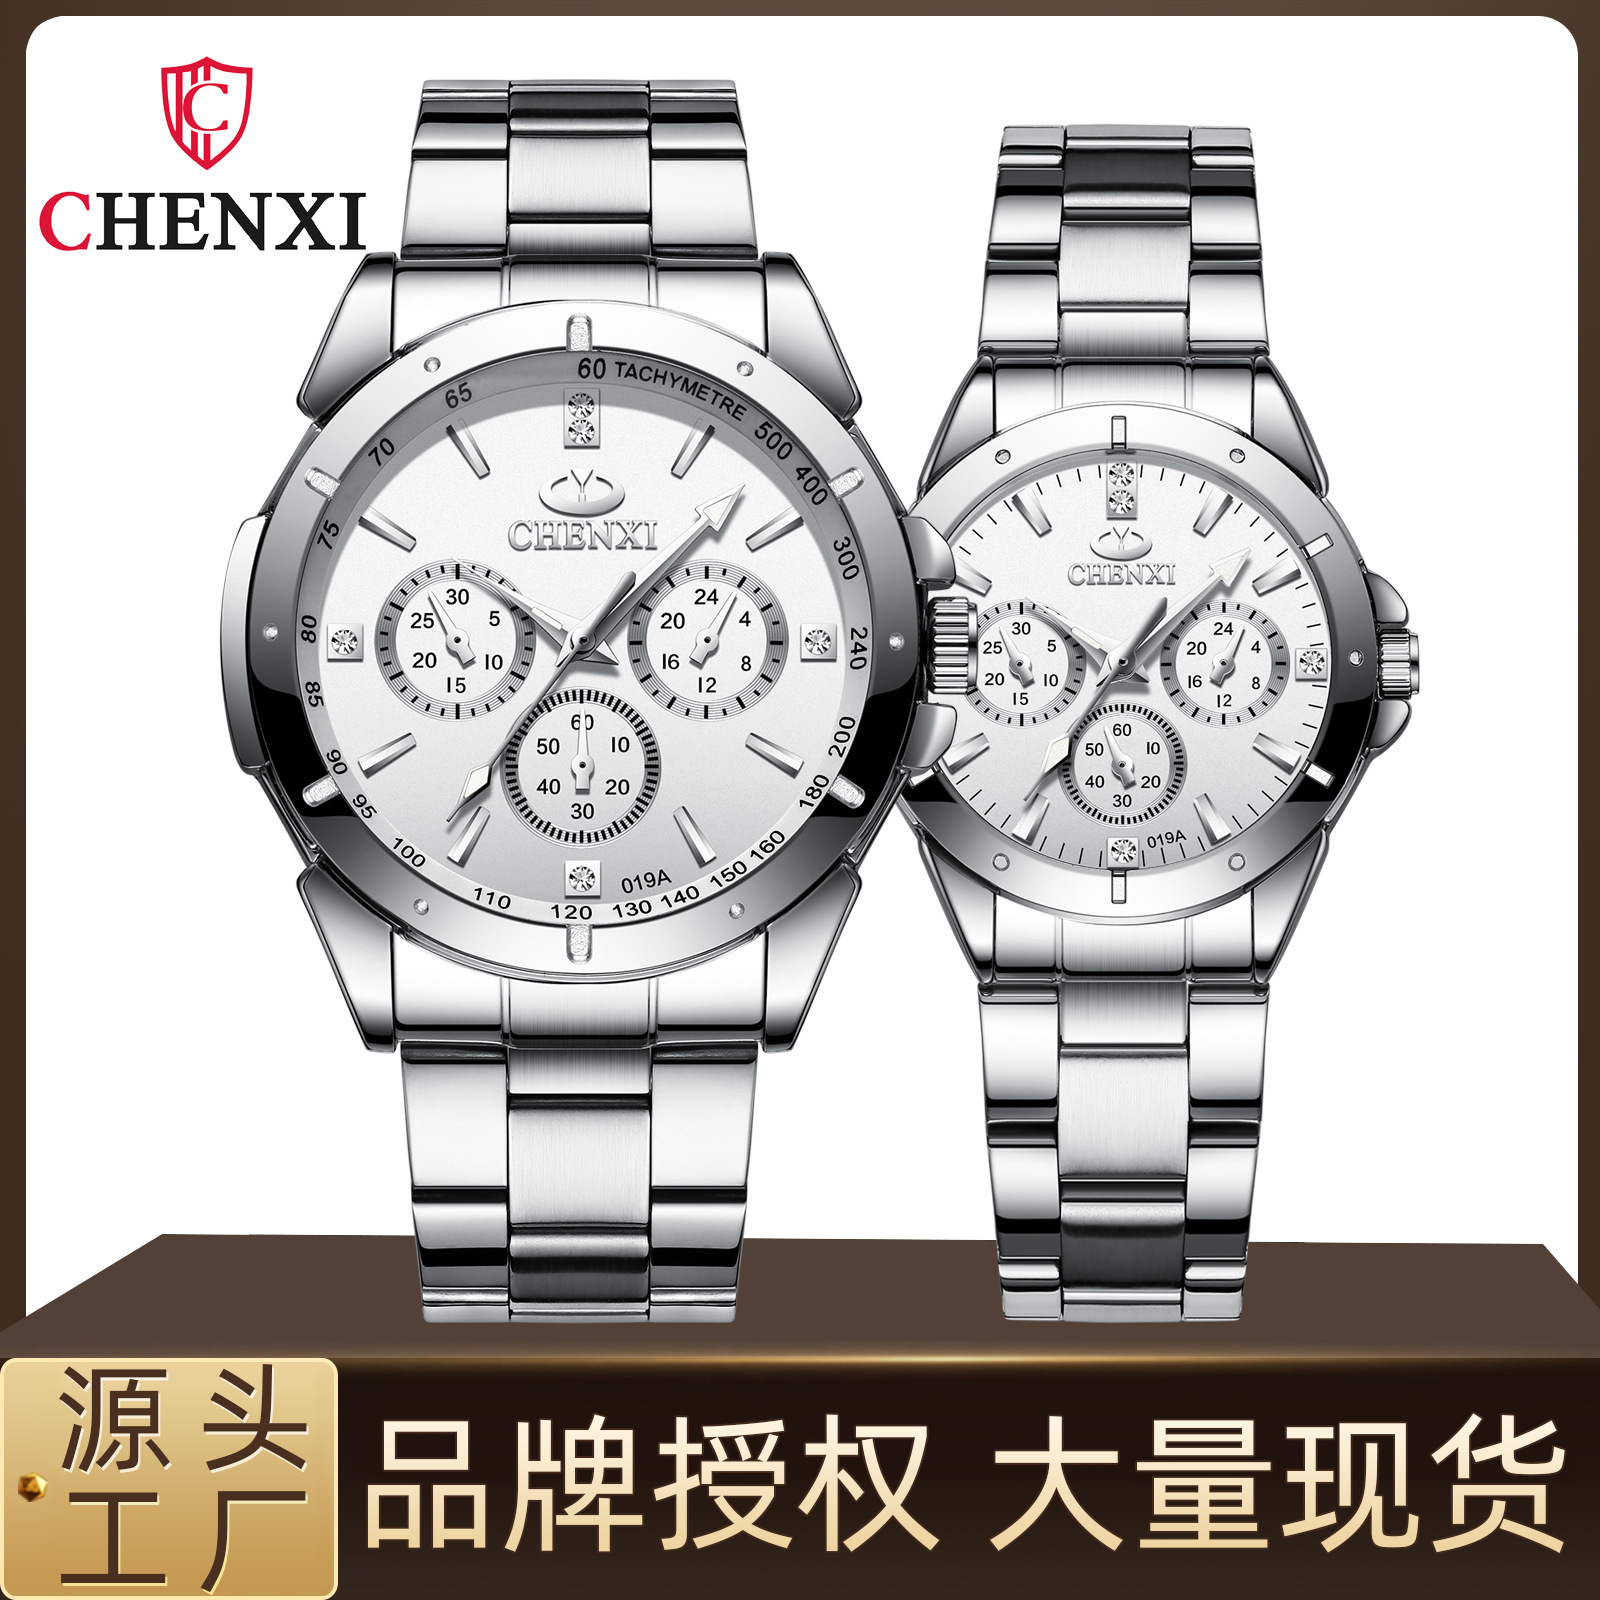 Waterproof Watch Women's Watch Hot Chenxi Brand Student Watch Wholesale Couple Watch Female Quartz Watch